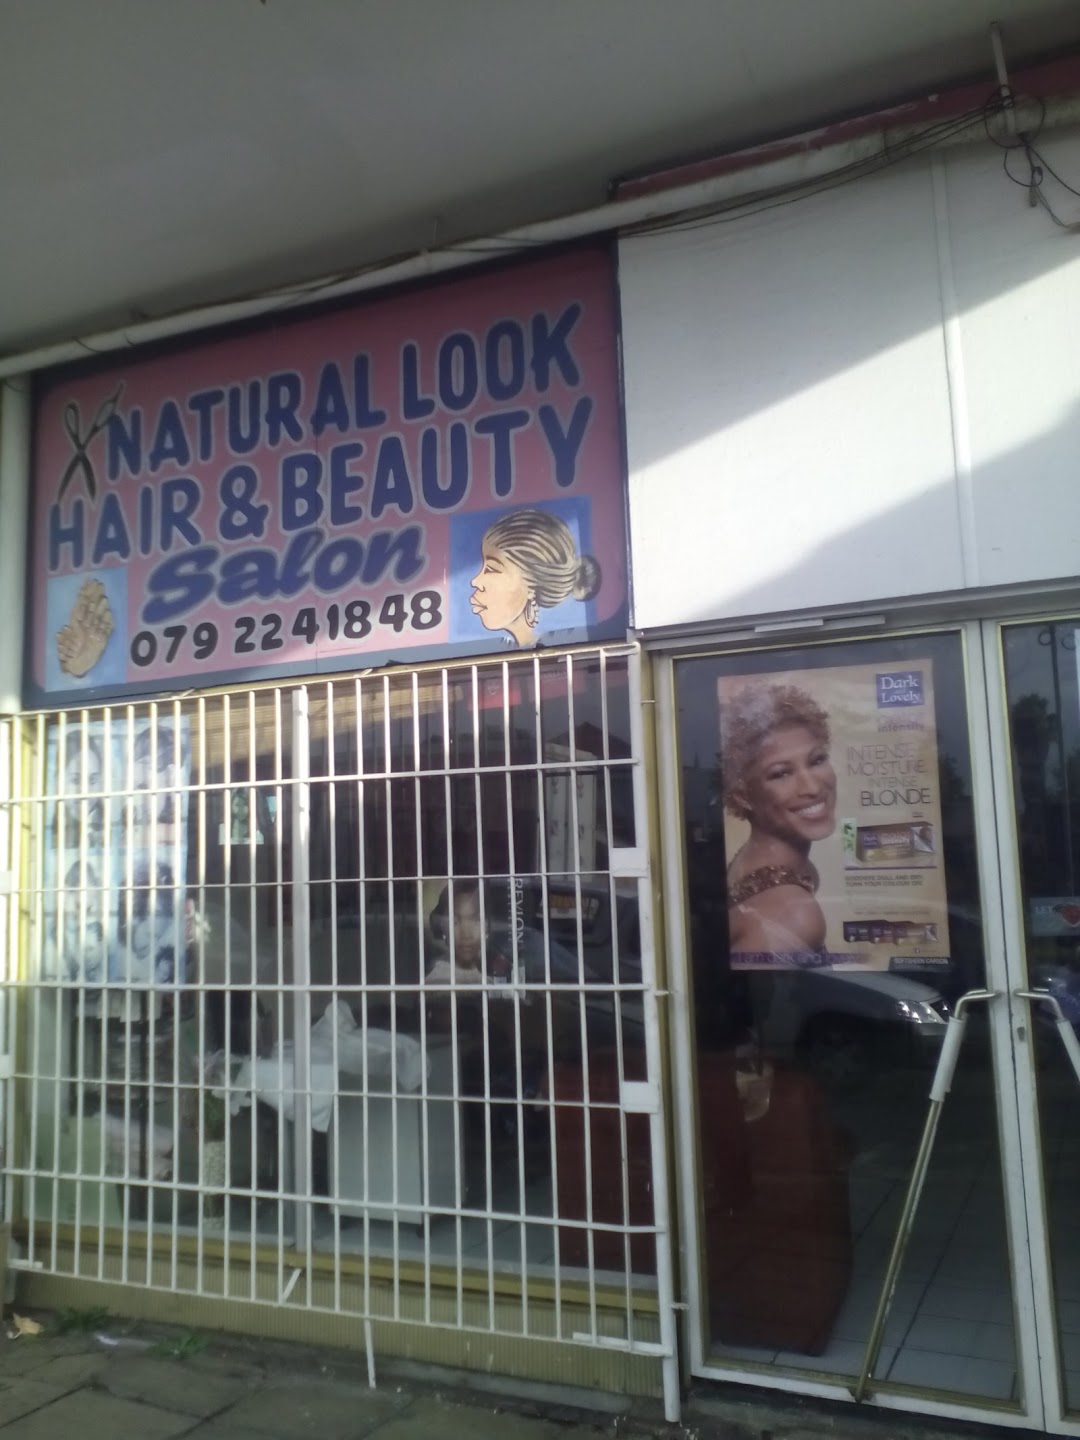 Natural Look Hair & Beauty Salon